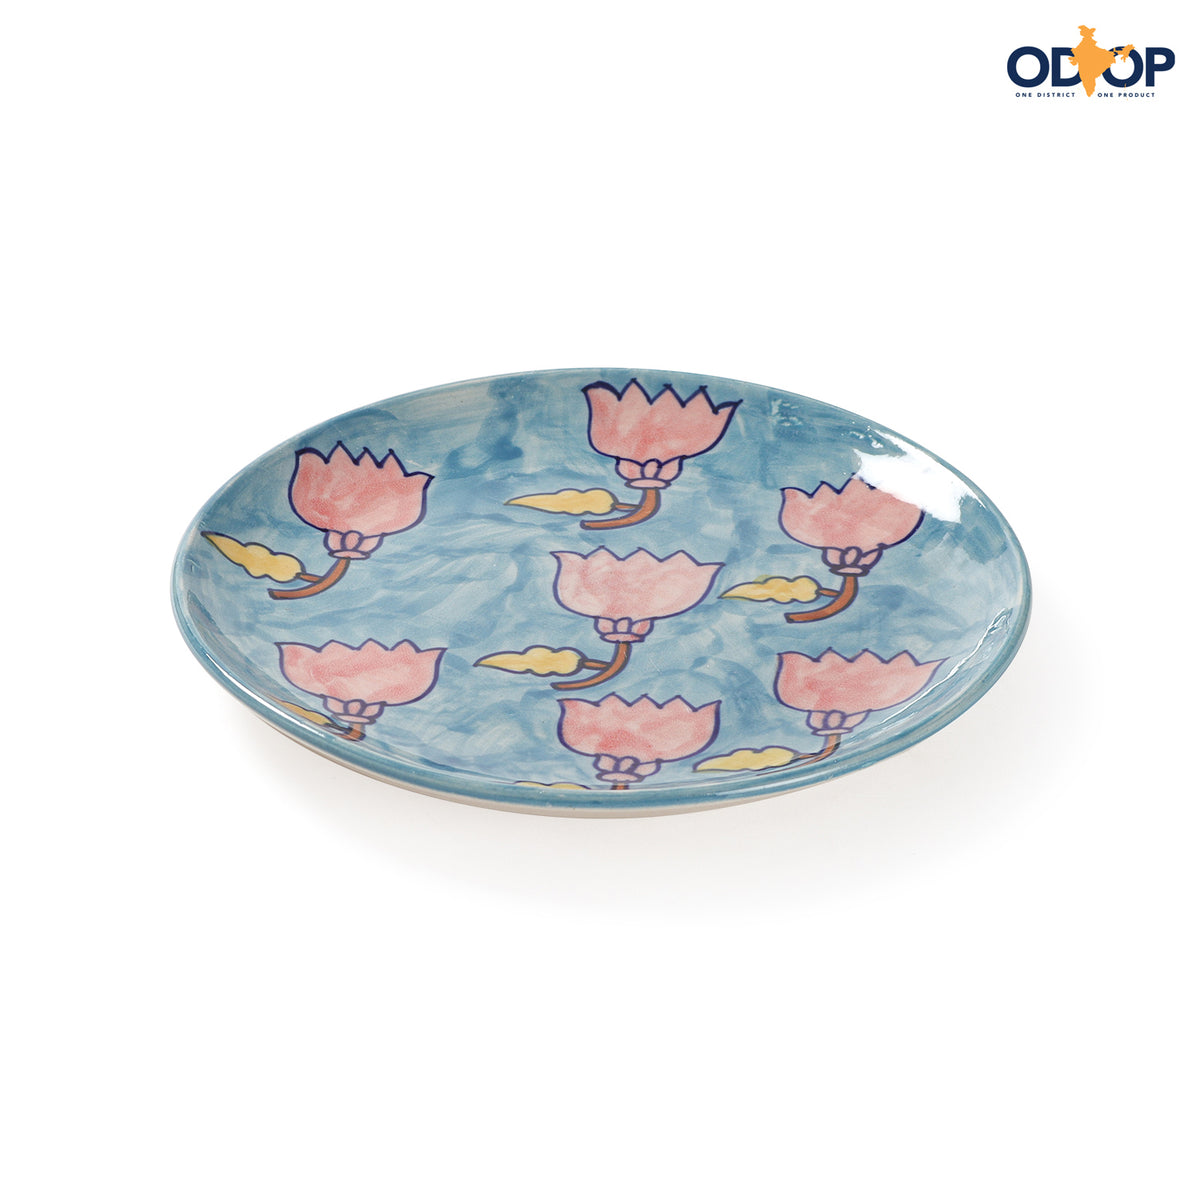 Handpainted Ceramic Plate 8"